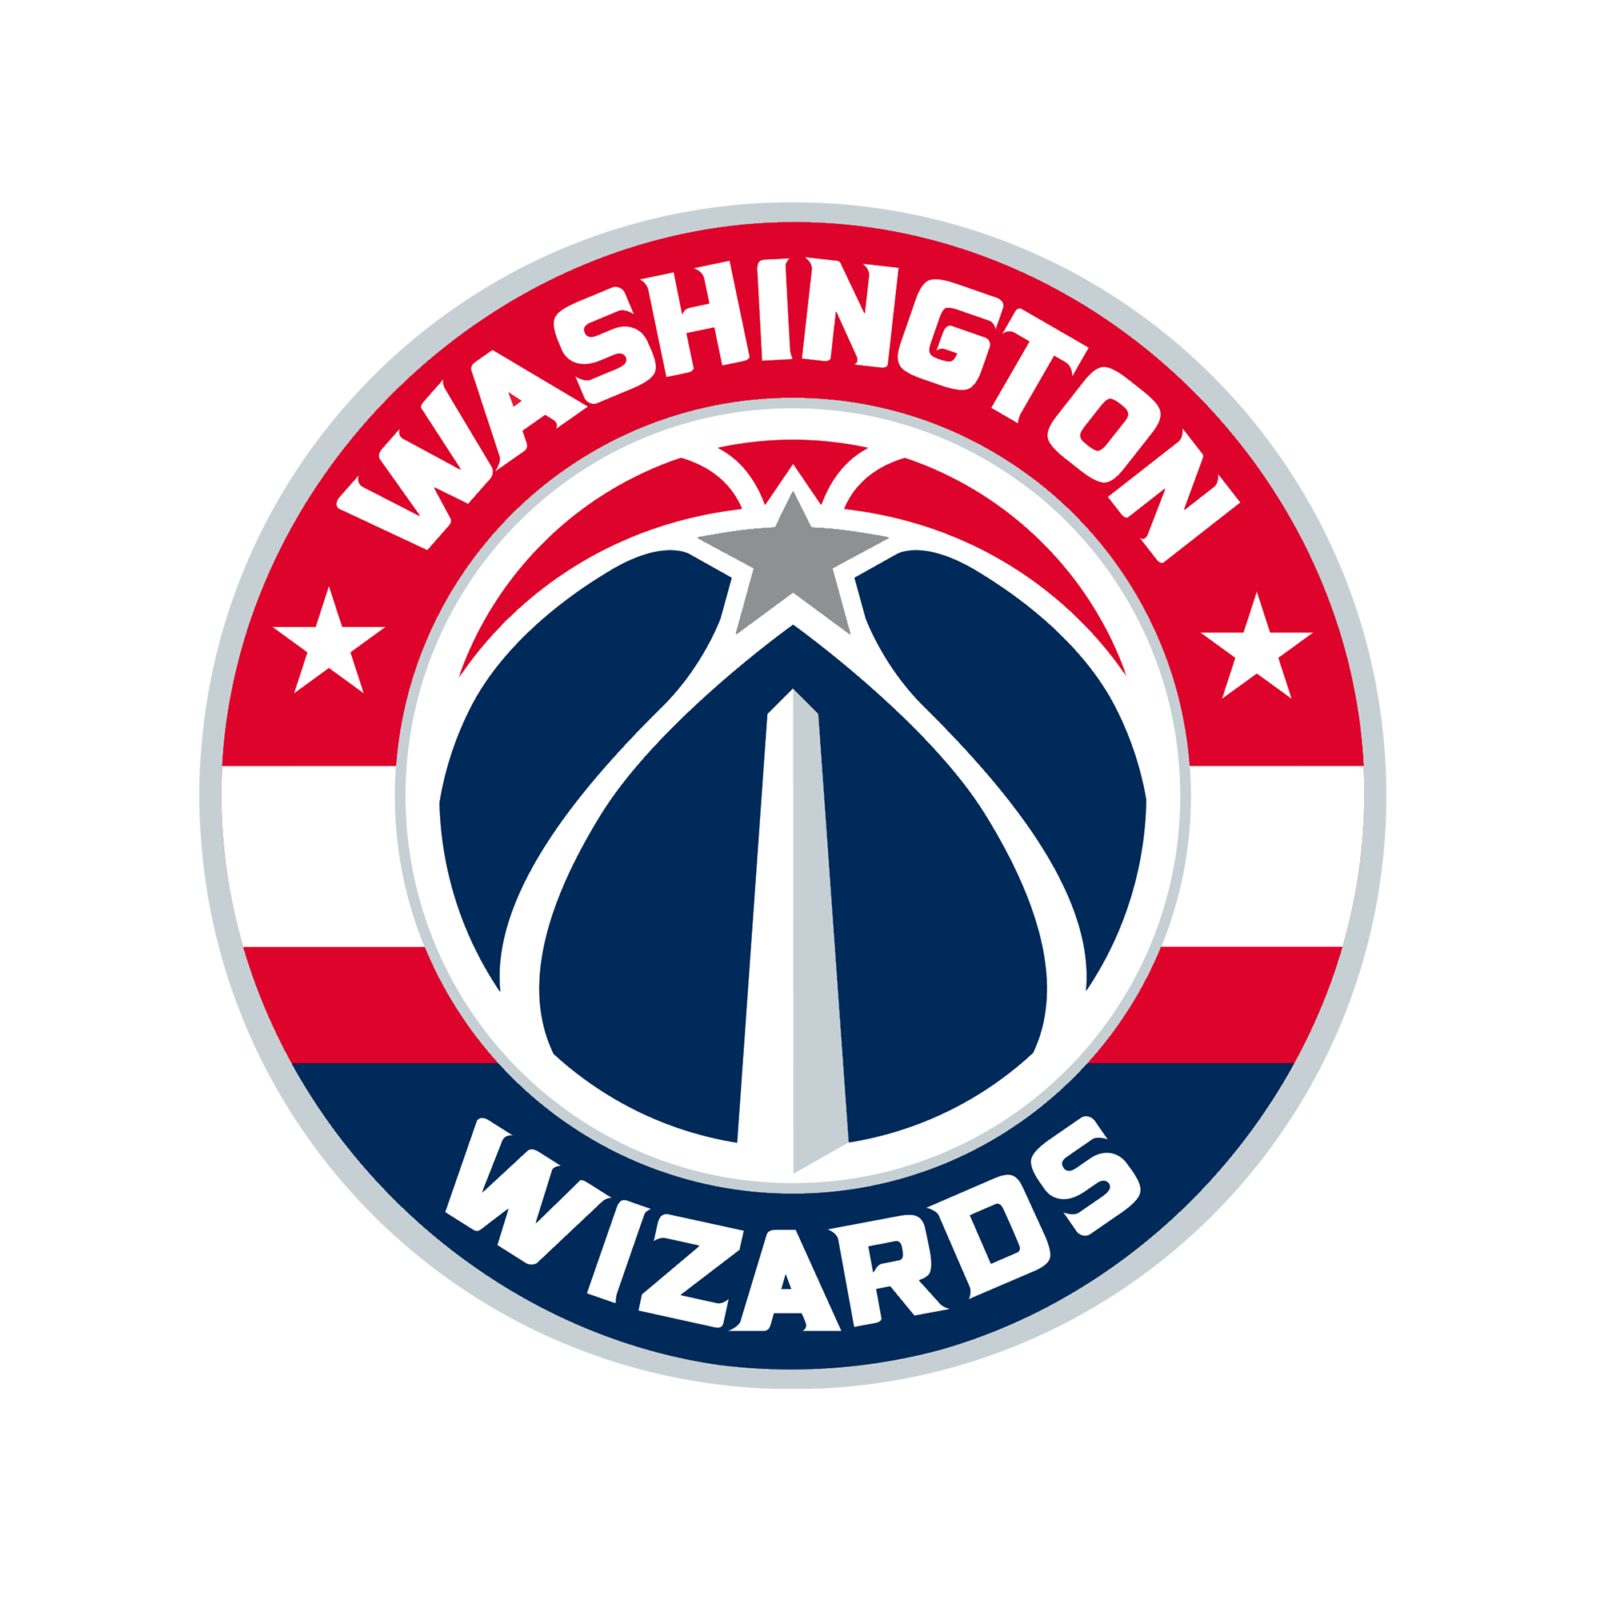 Washington Wizards Basketball Club Logo